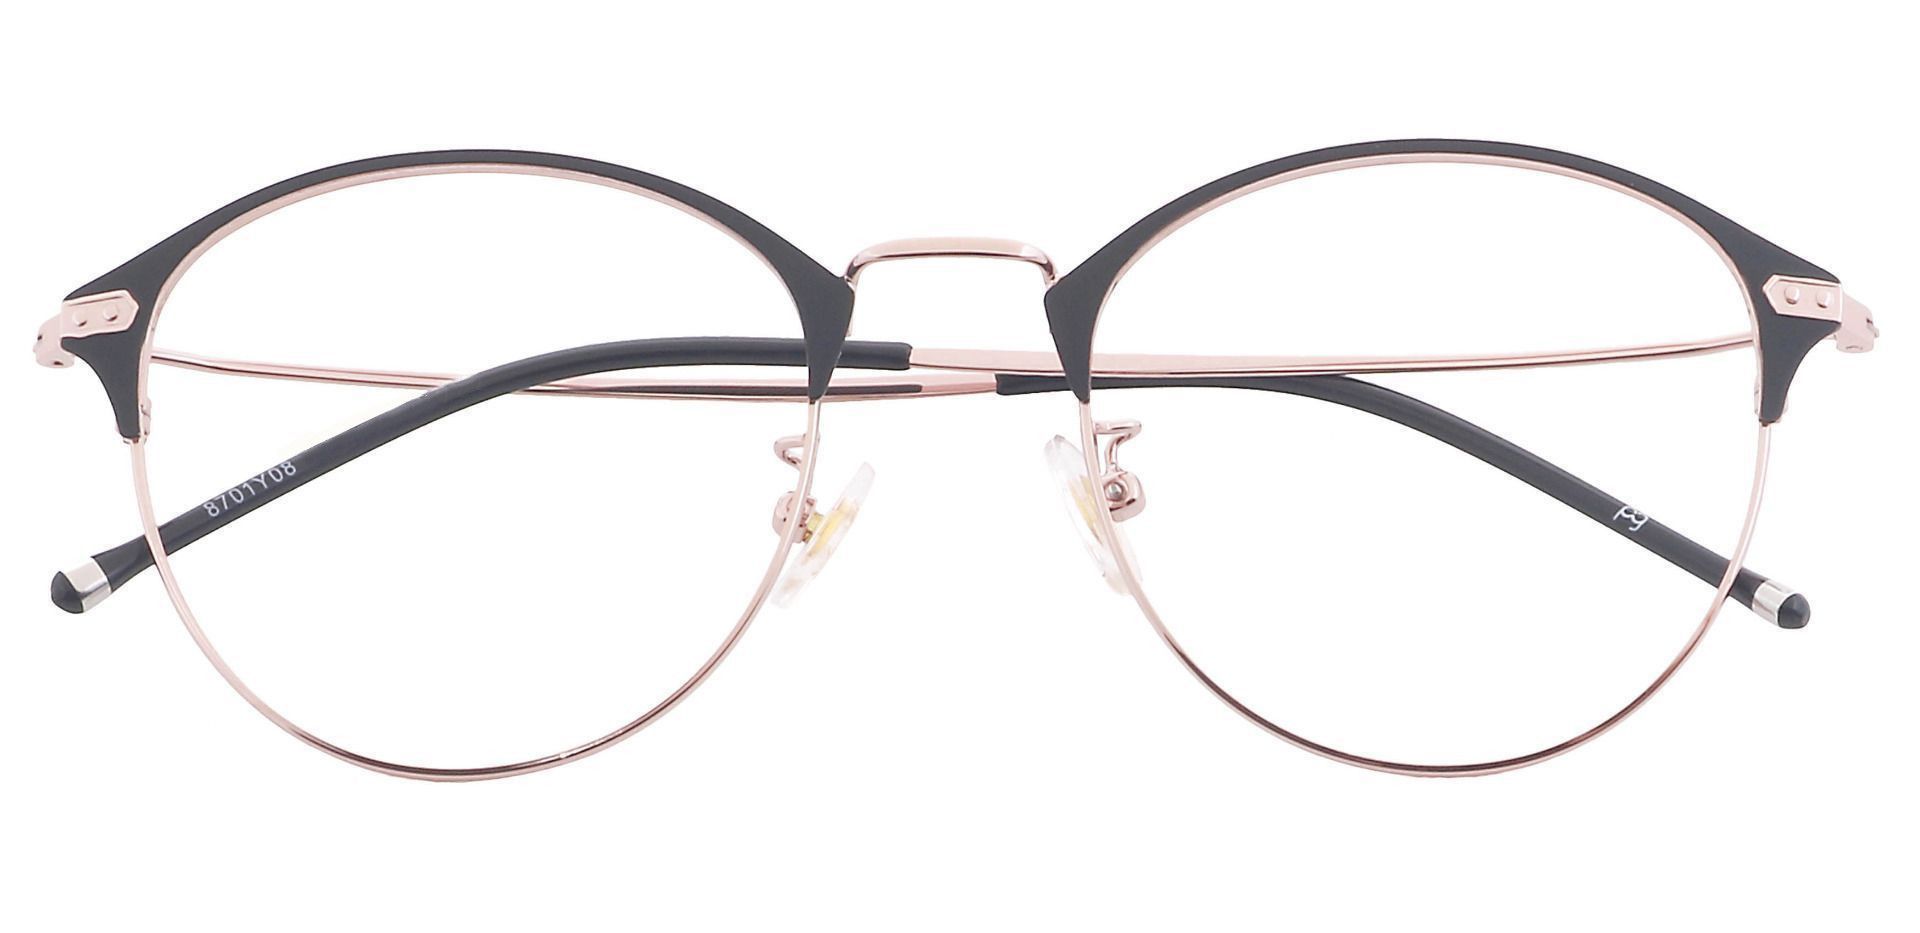 Lenox Oval Lined Bifocal Glasses - Yellow